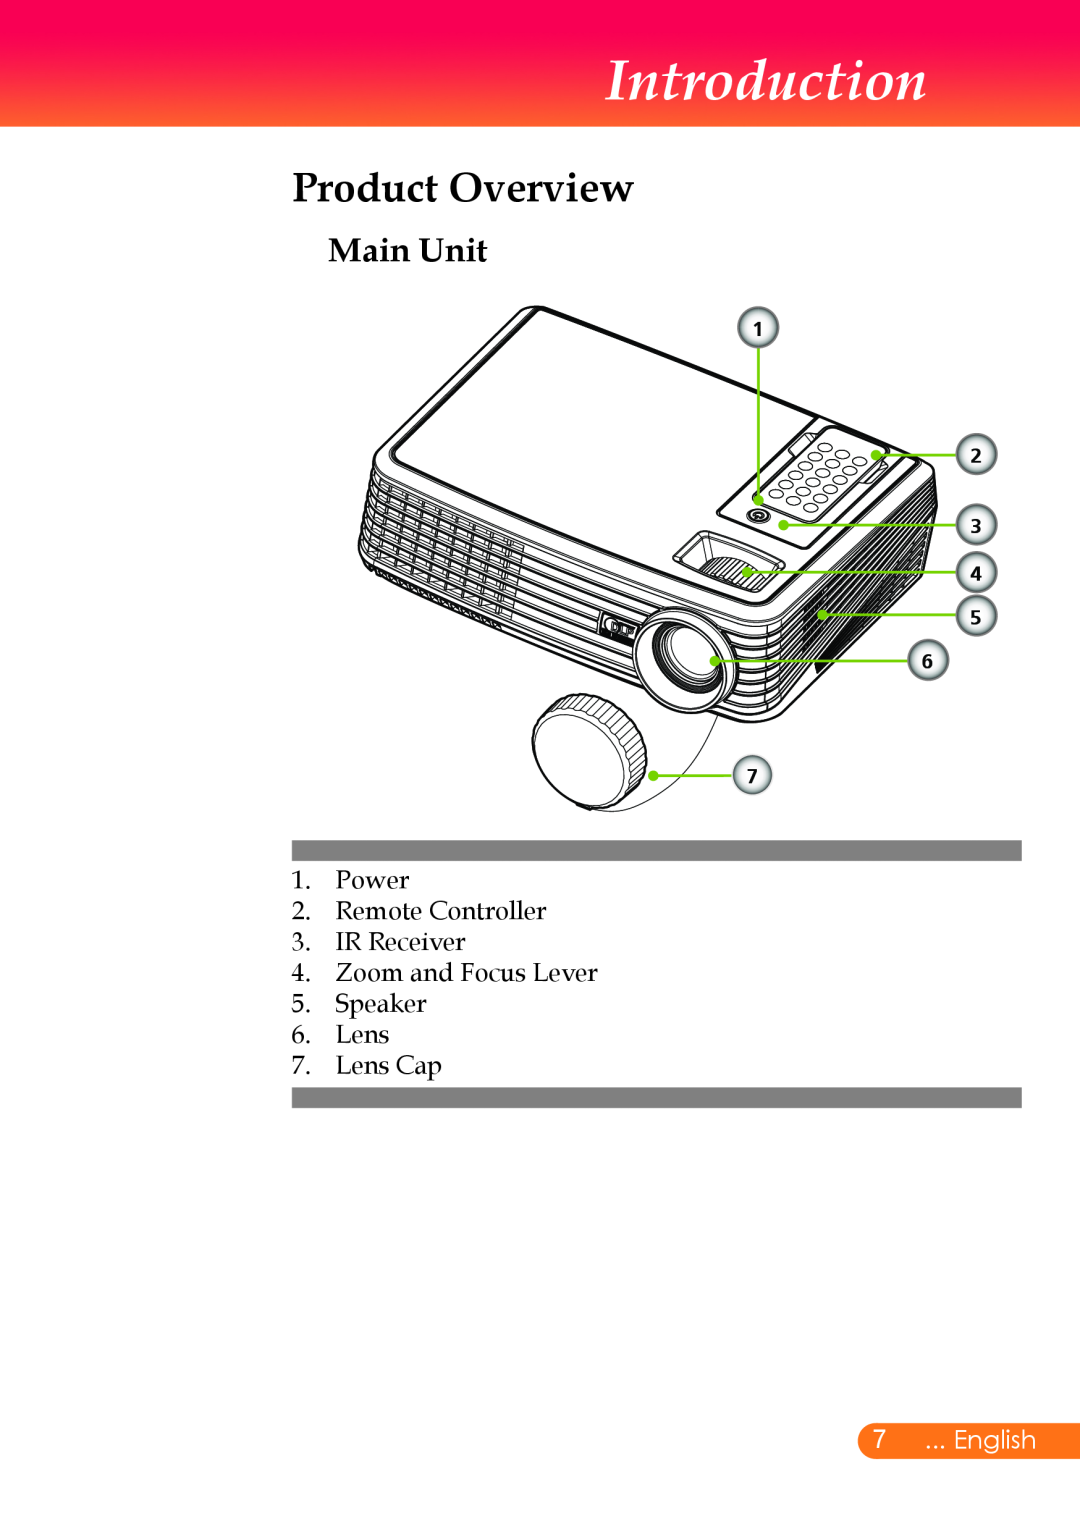 InFocus X6, X7 manual Product Overview, Main Unit, Lens 7. Lens Cap, Introduction, English 